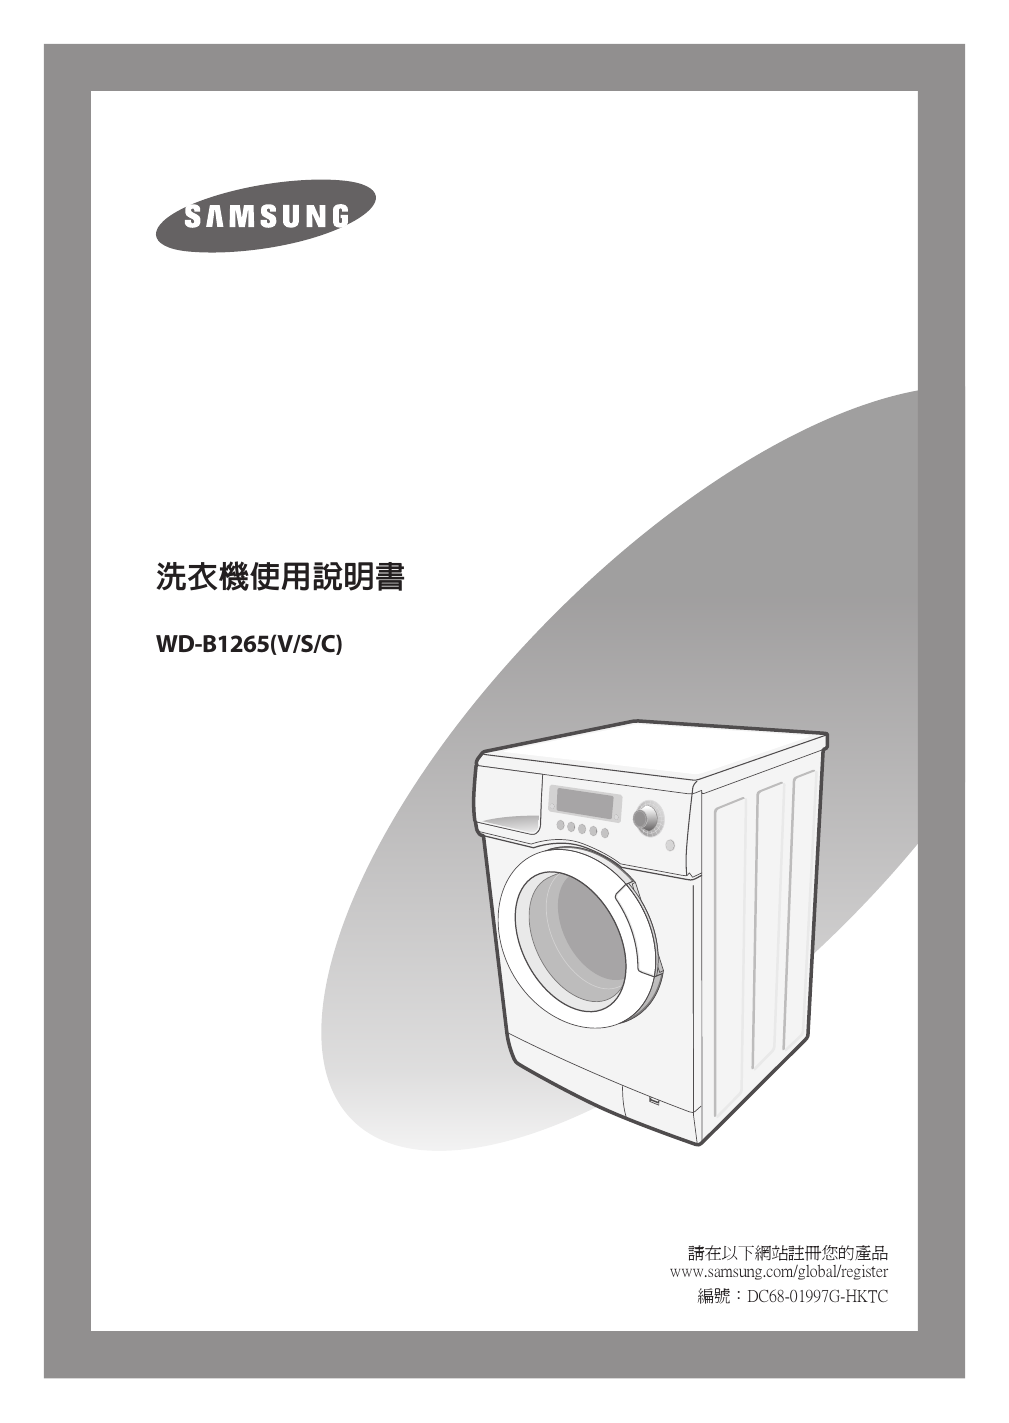 Samsung Wd B1265c User S Manual Manualzz